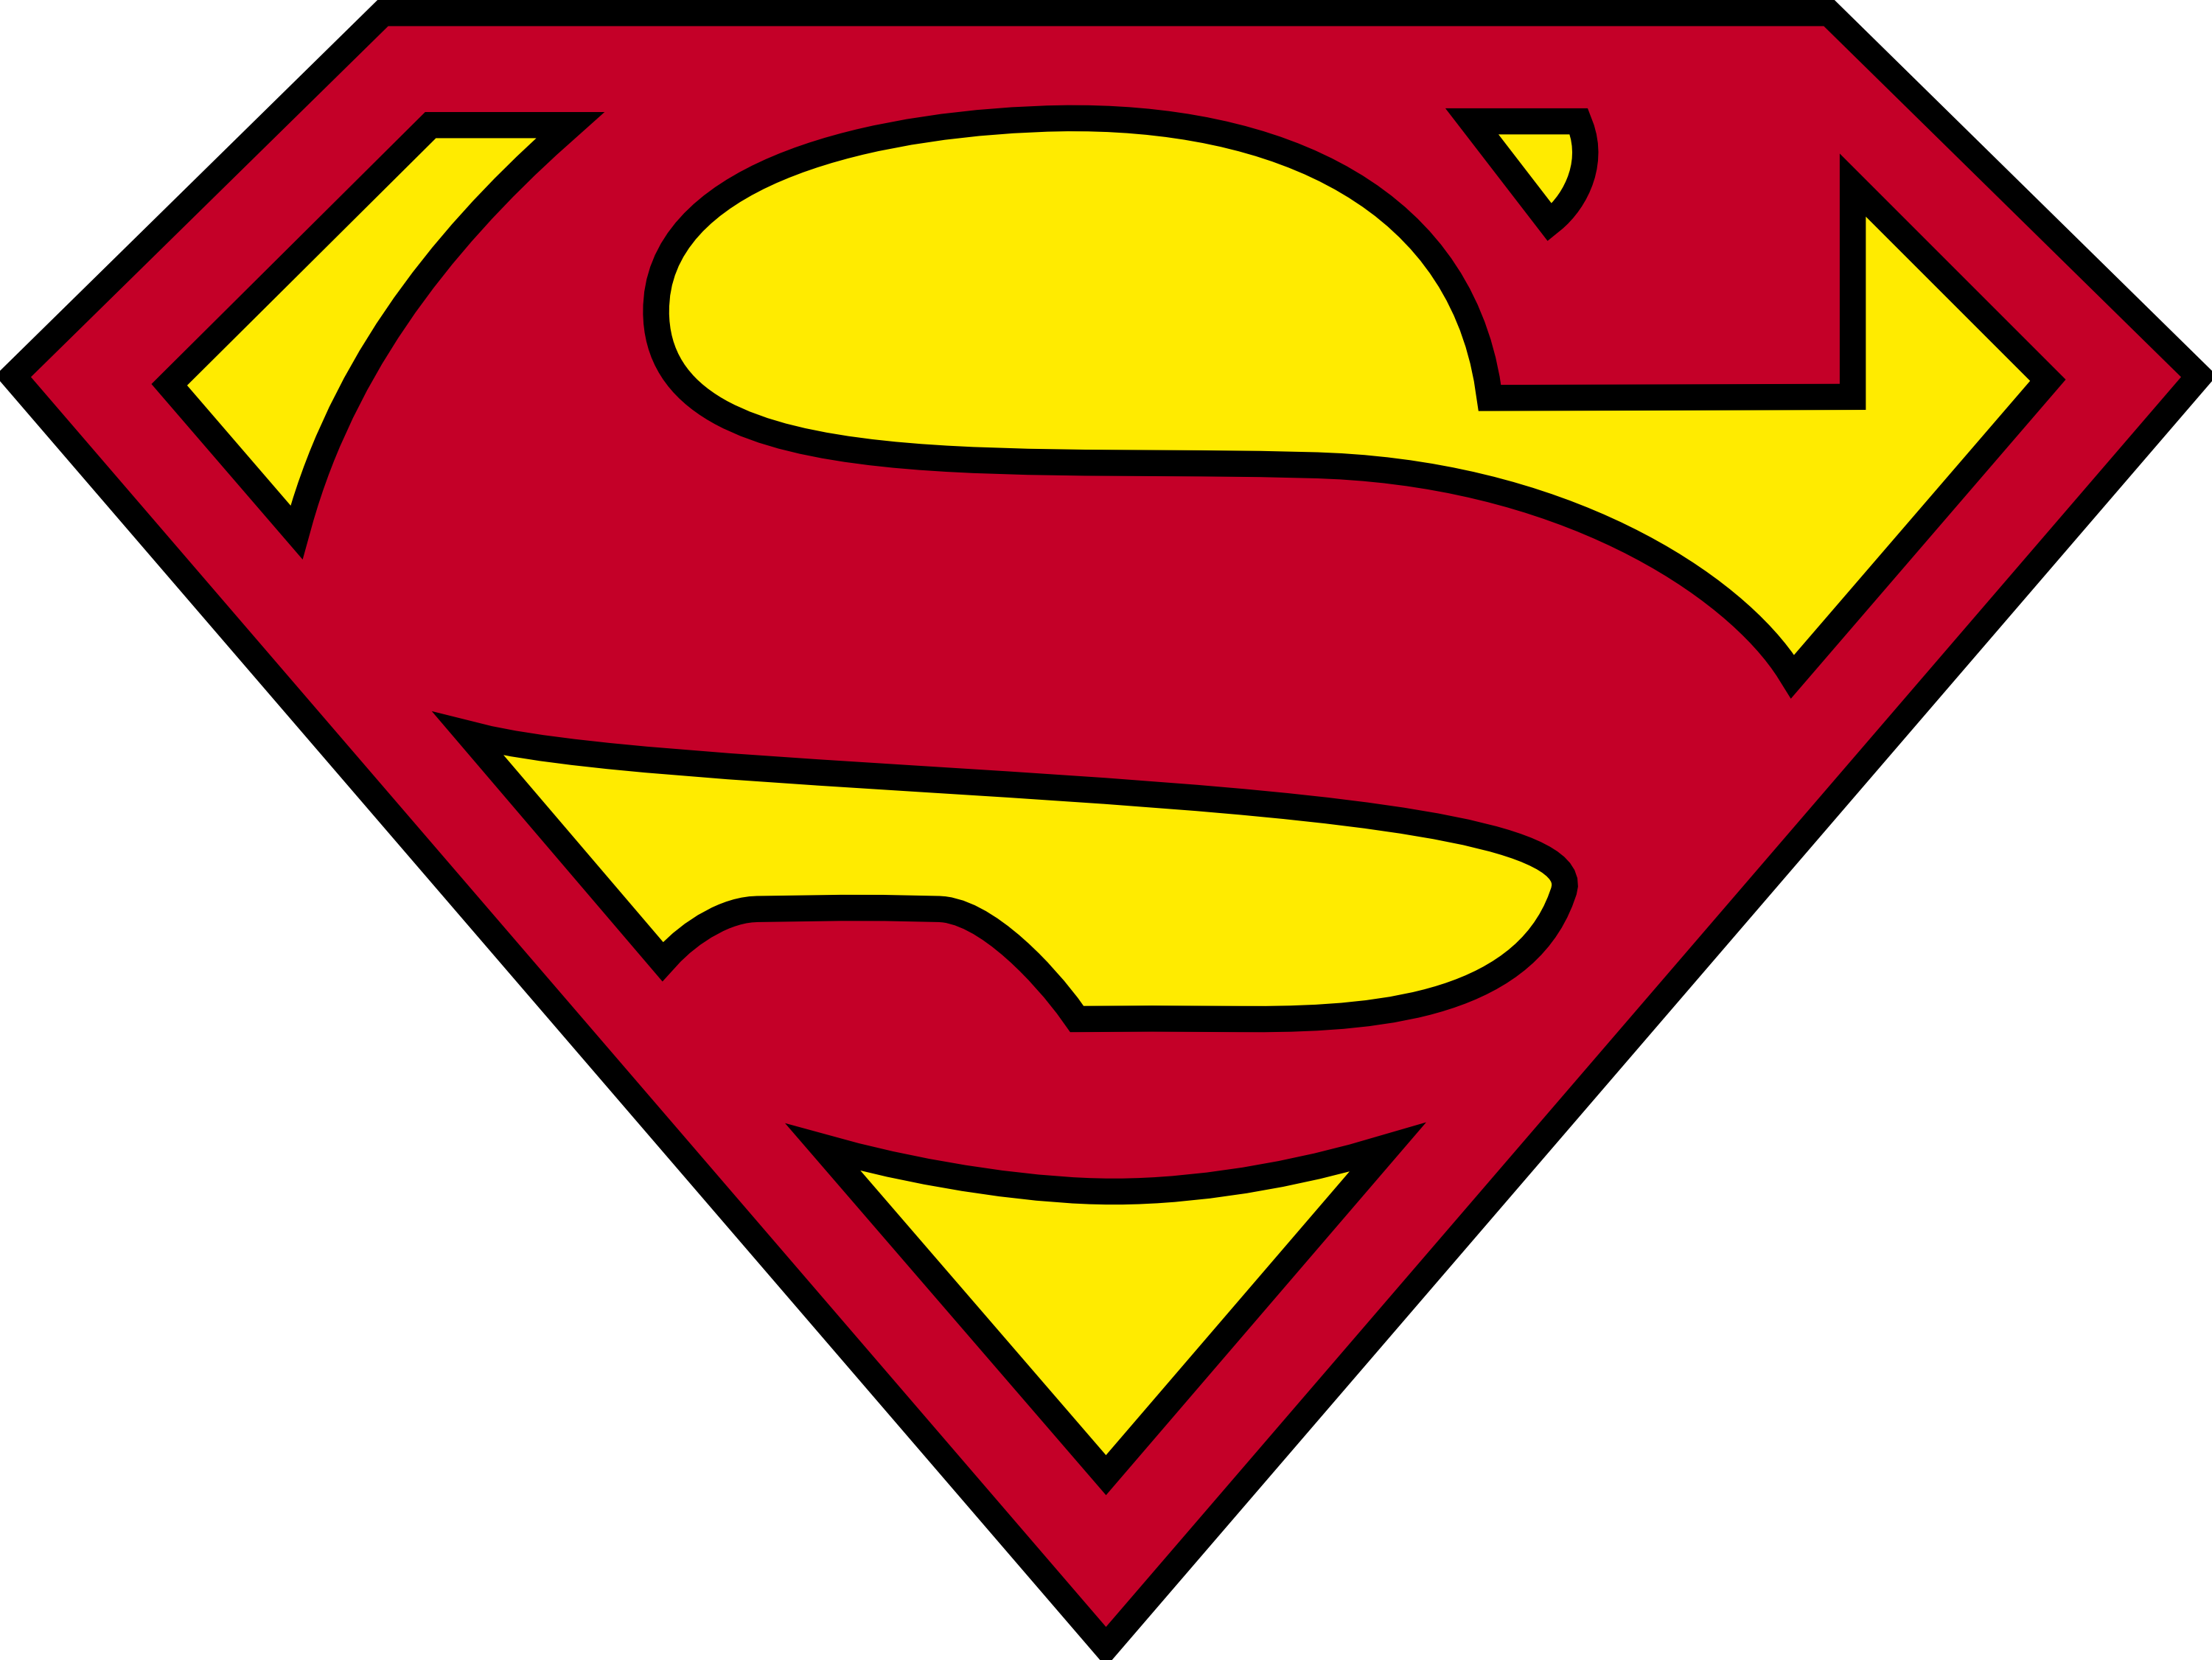 1000+ images about Superhero | Superhero logos ...